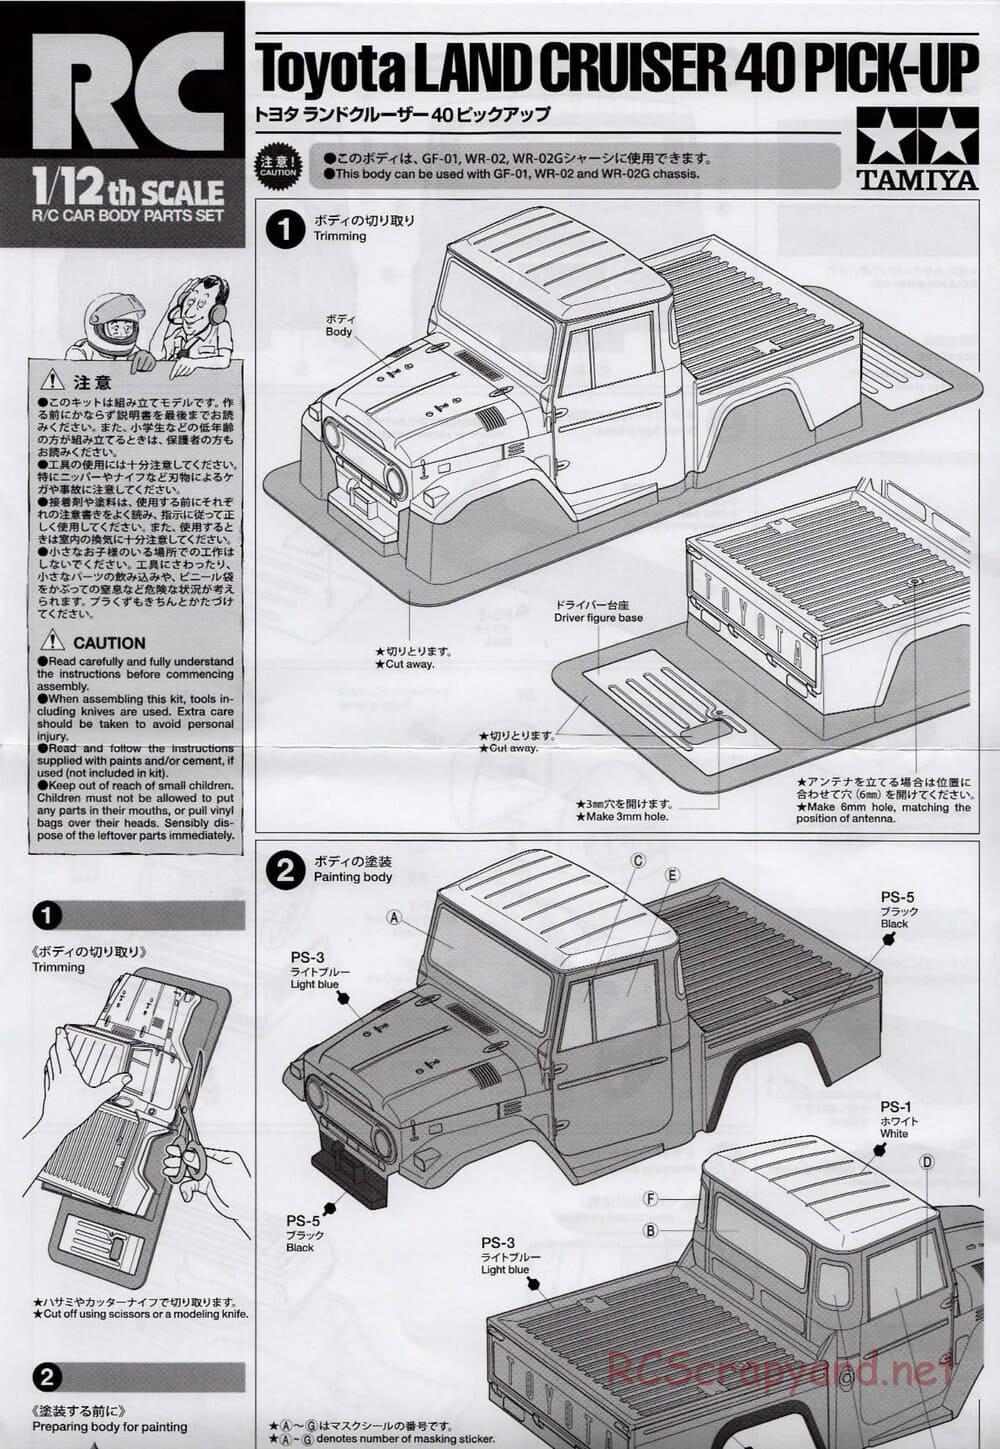 Tamiya - Toyota Land Cruiser 40 Pick-Up - GF-01 Chassis - Body Manual - Page 1